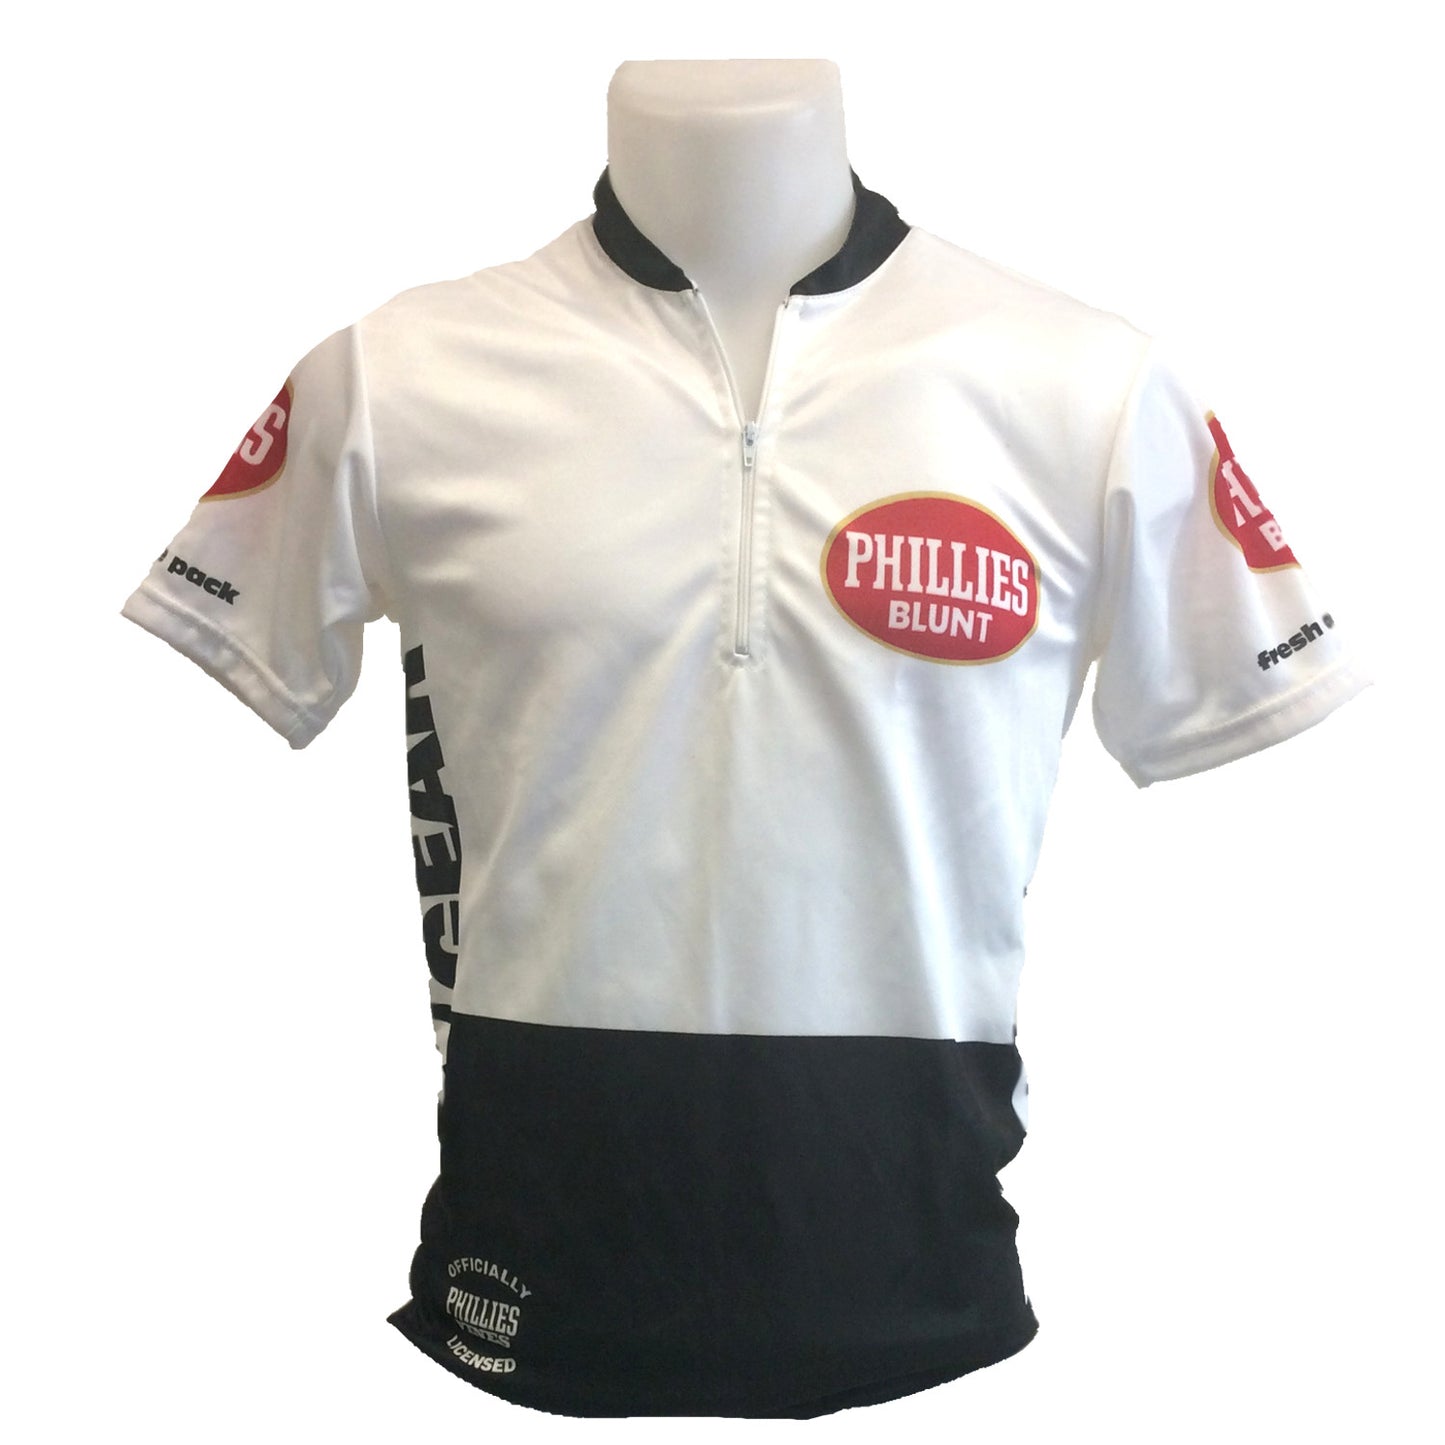 Vintage Phillies Blunt Bike Shirt